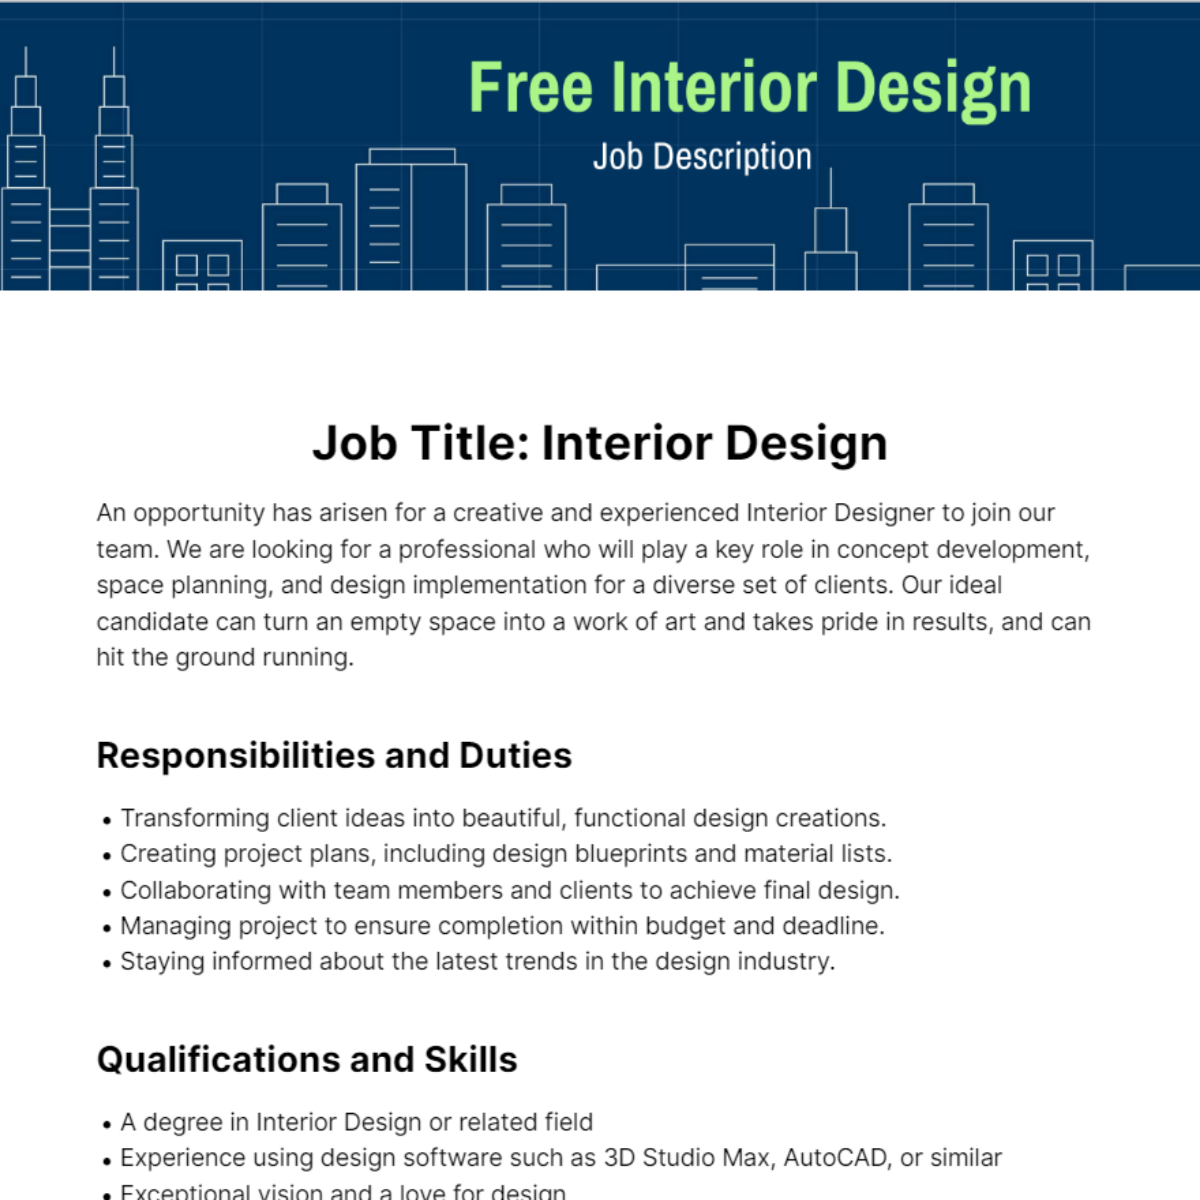 Free Interior Design Job Description Template